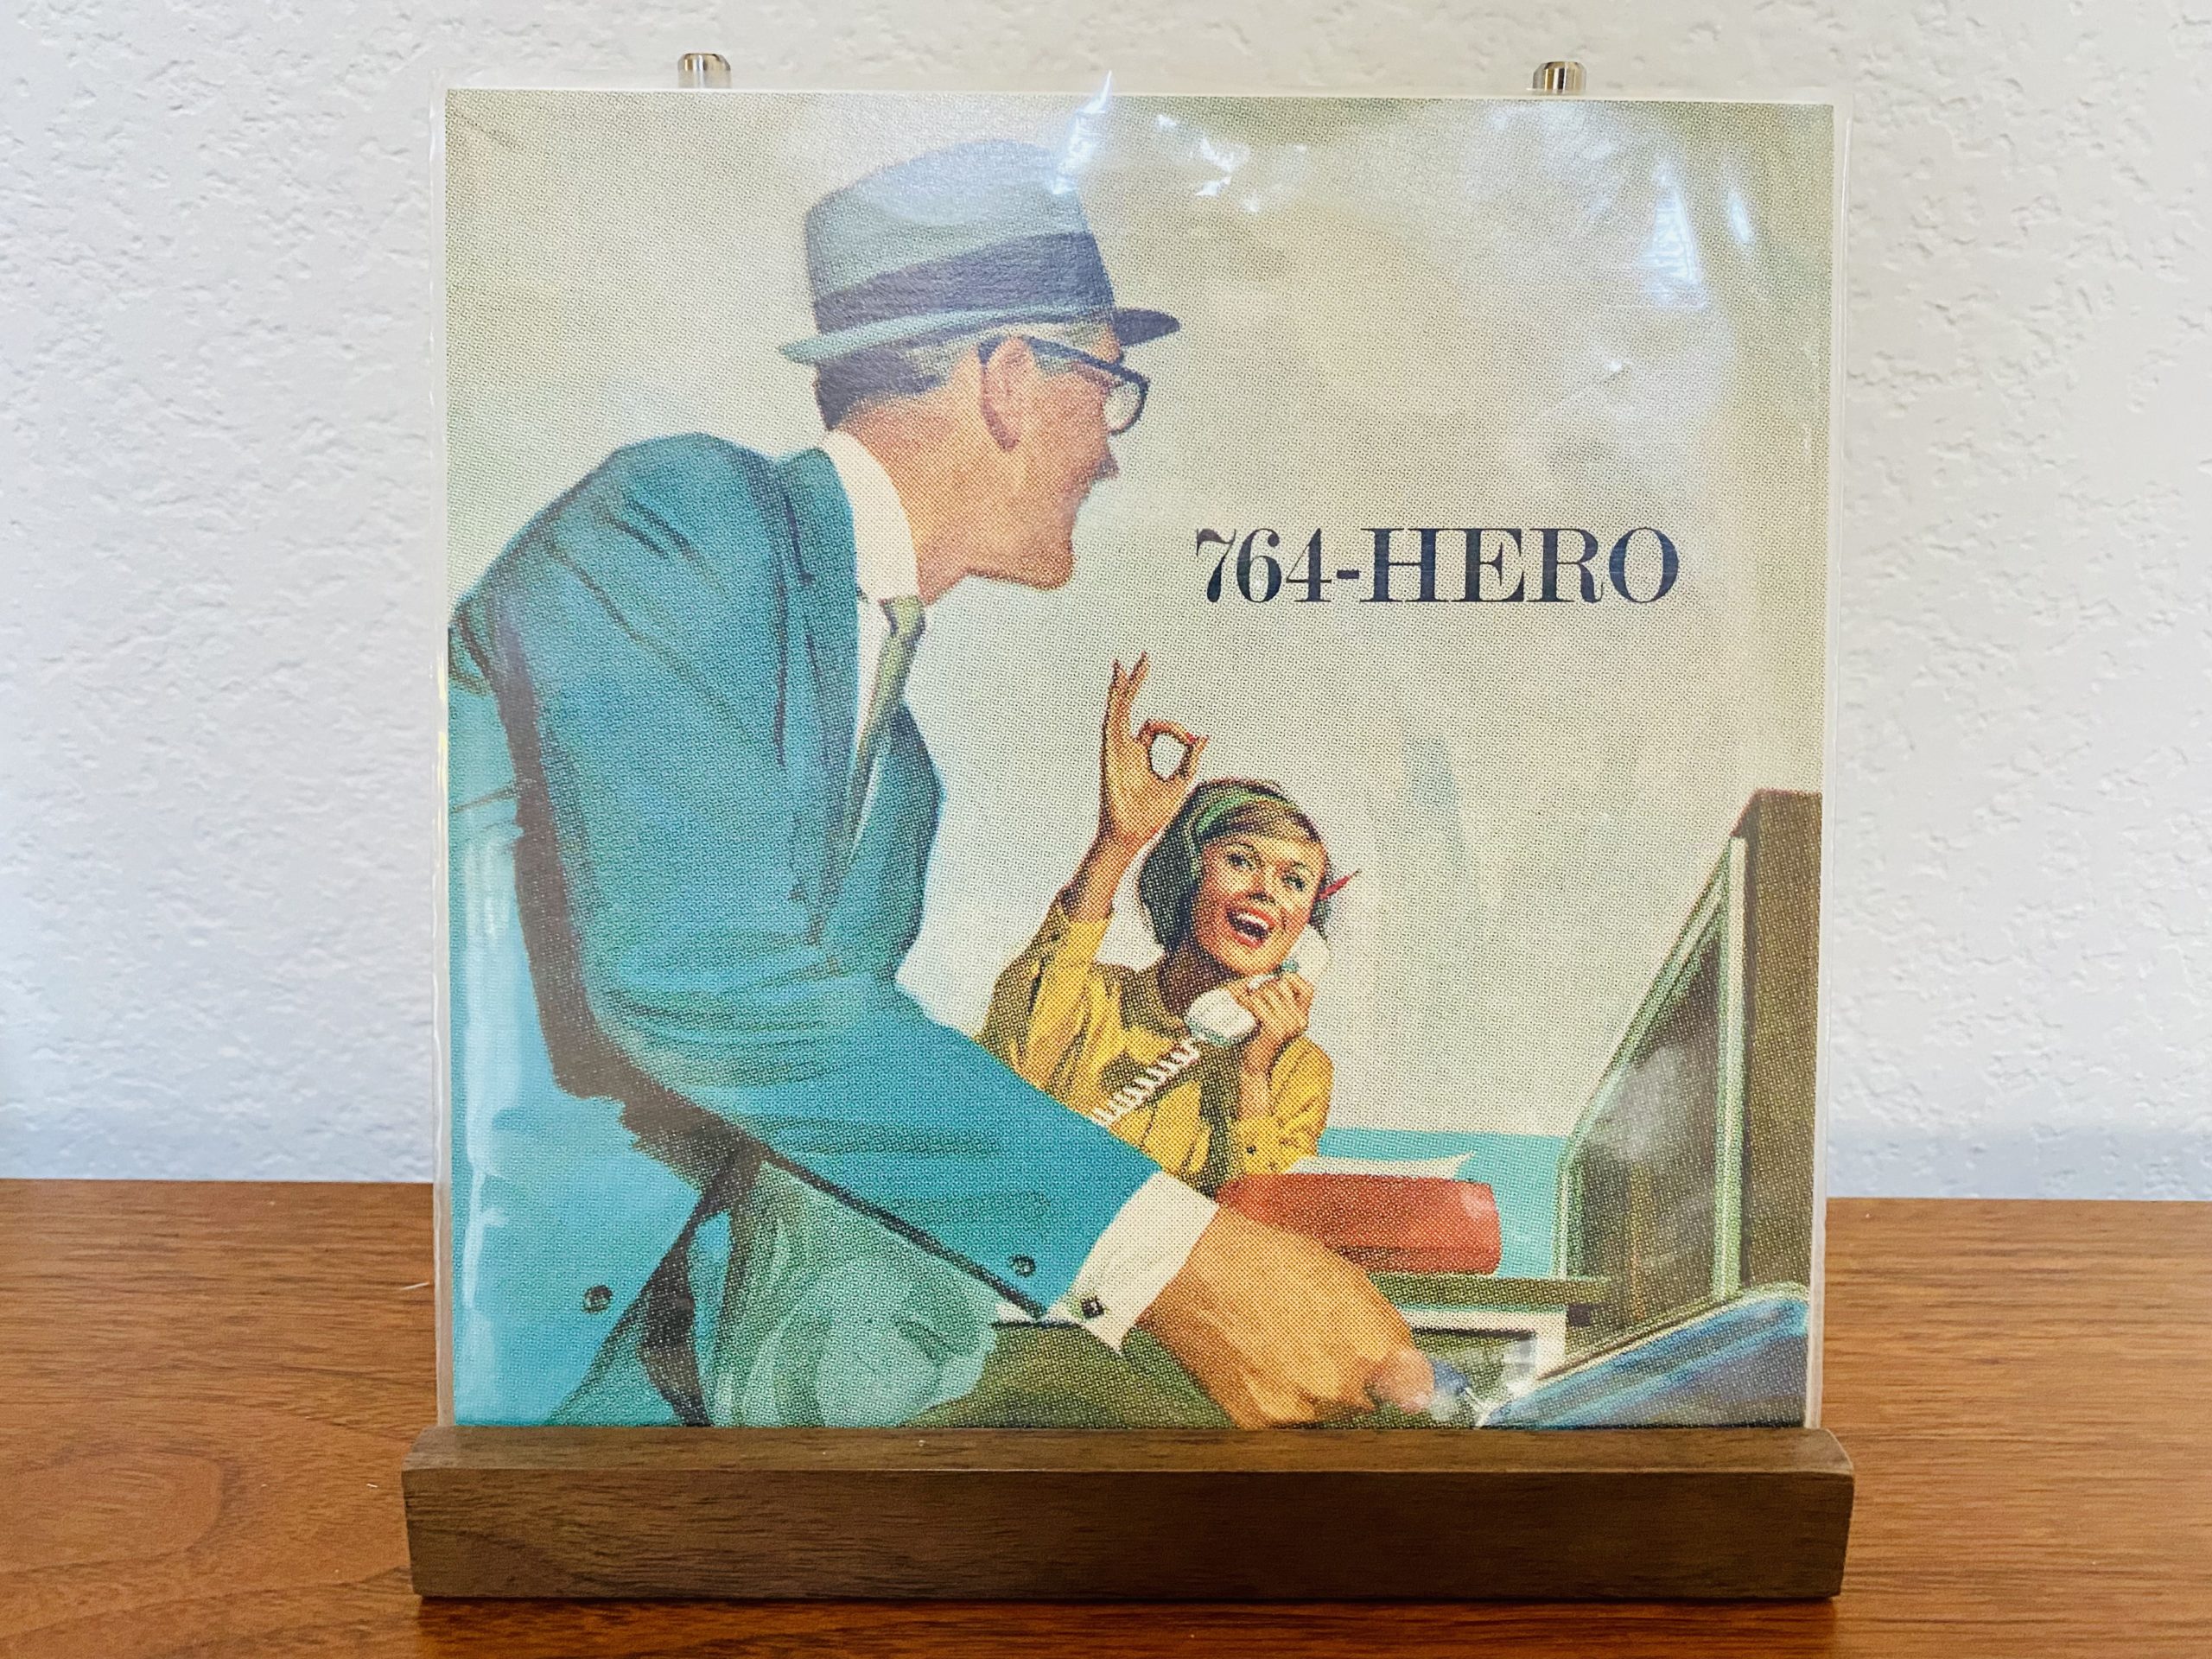 764-HERO High School Poetry Vinyl